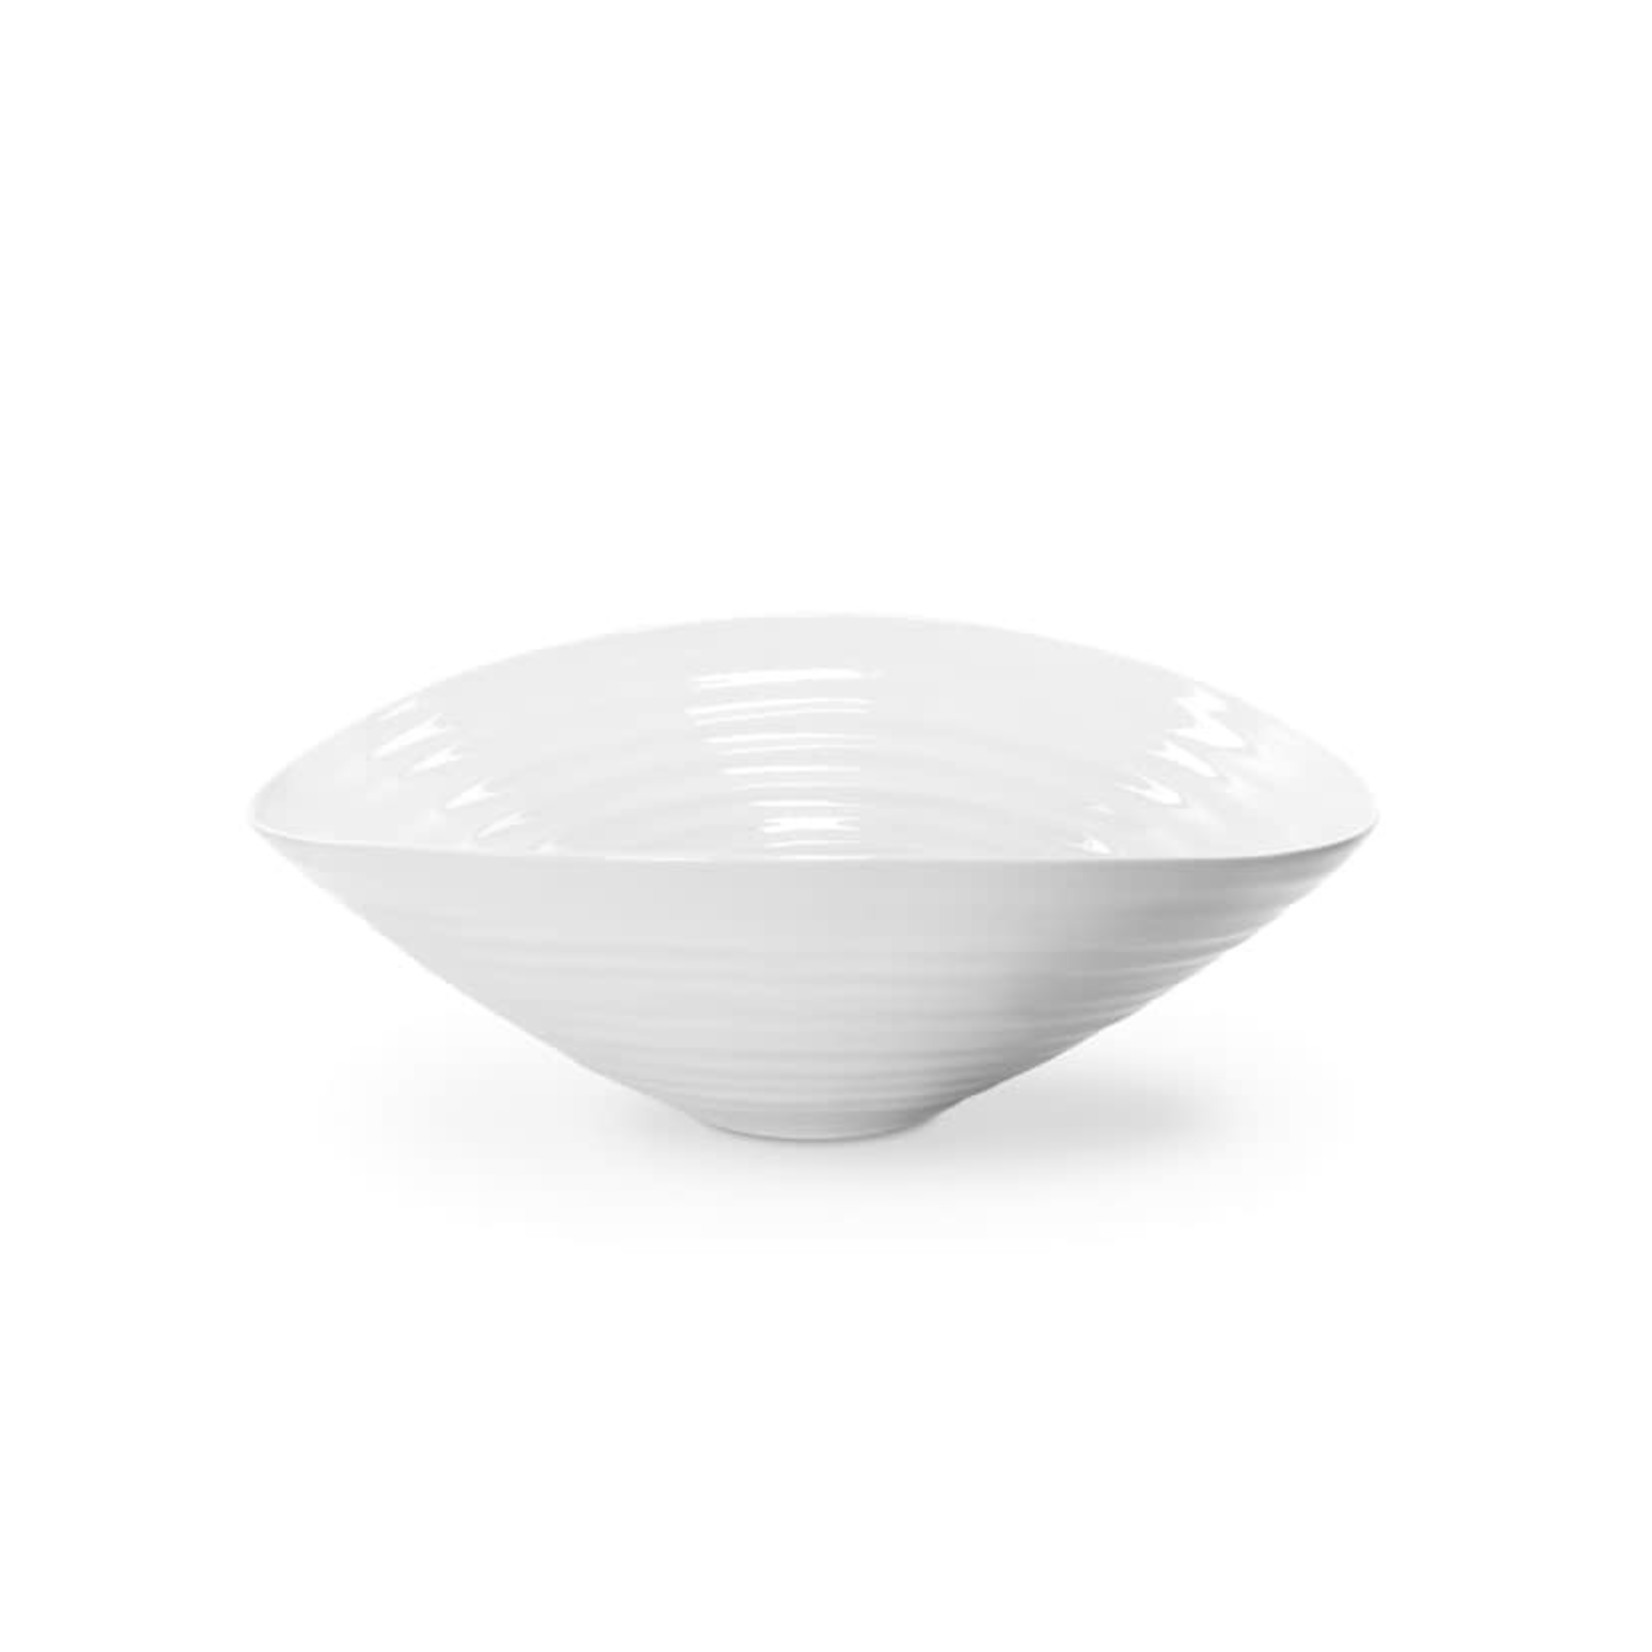 SOPHIE CONRAN SOPHIE CONRAN Salad Bowl Medium 11.25" - White